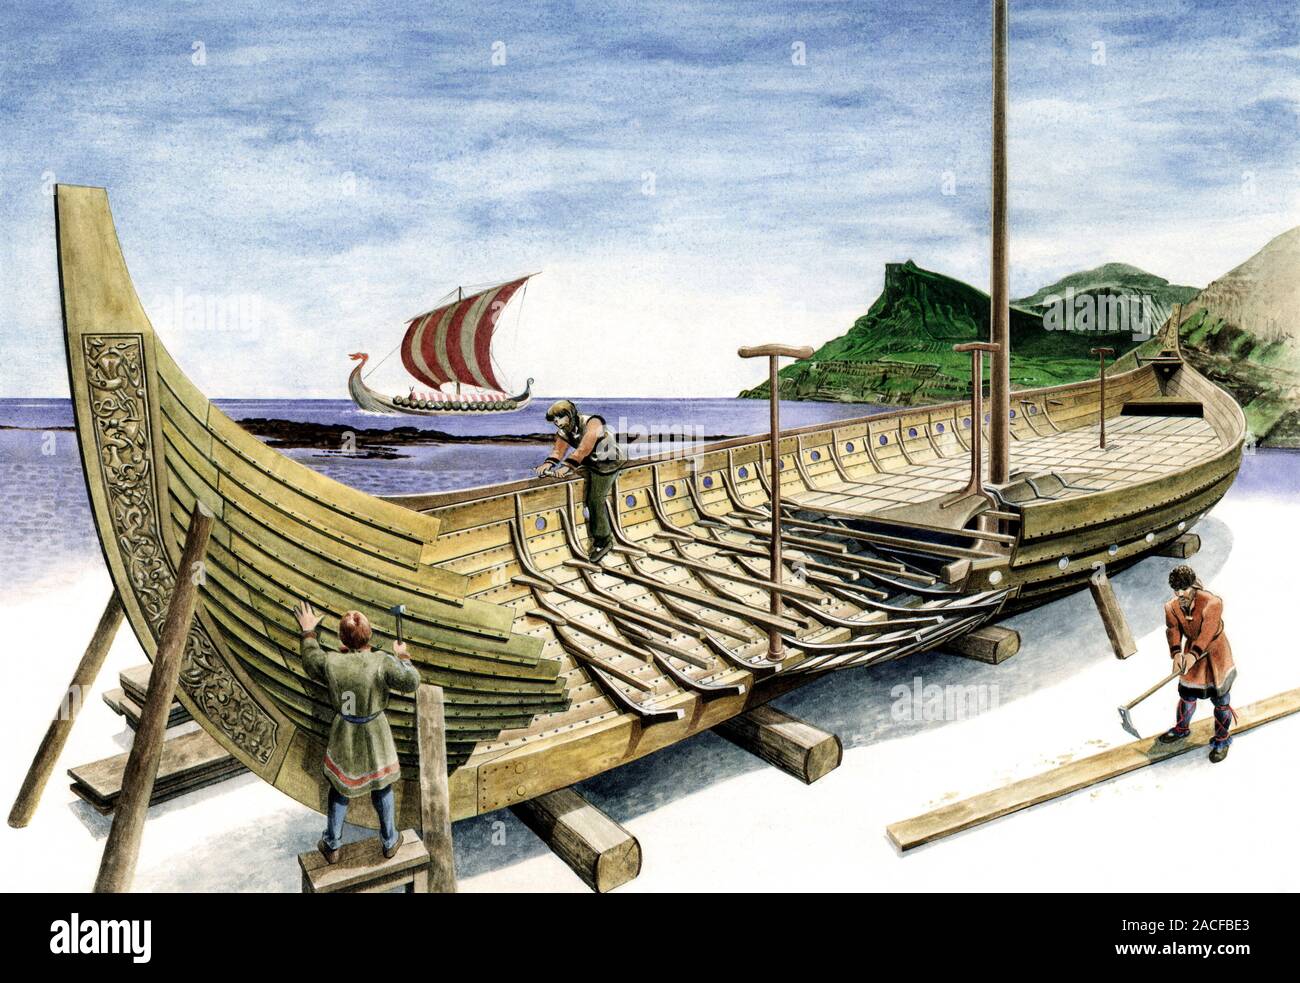 Три ладьи. Ладья Драккар викингов. Дракар викингов постройка. Лонгшип викингов. Лодка викингов дракар.